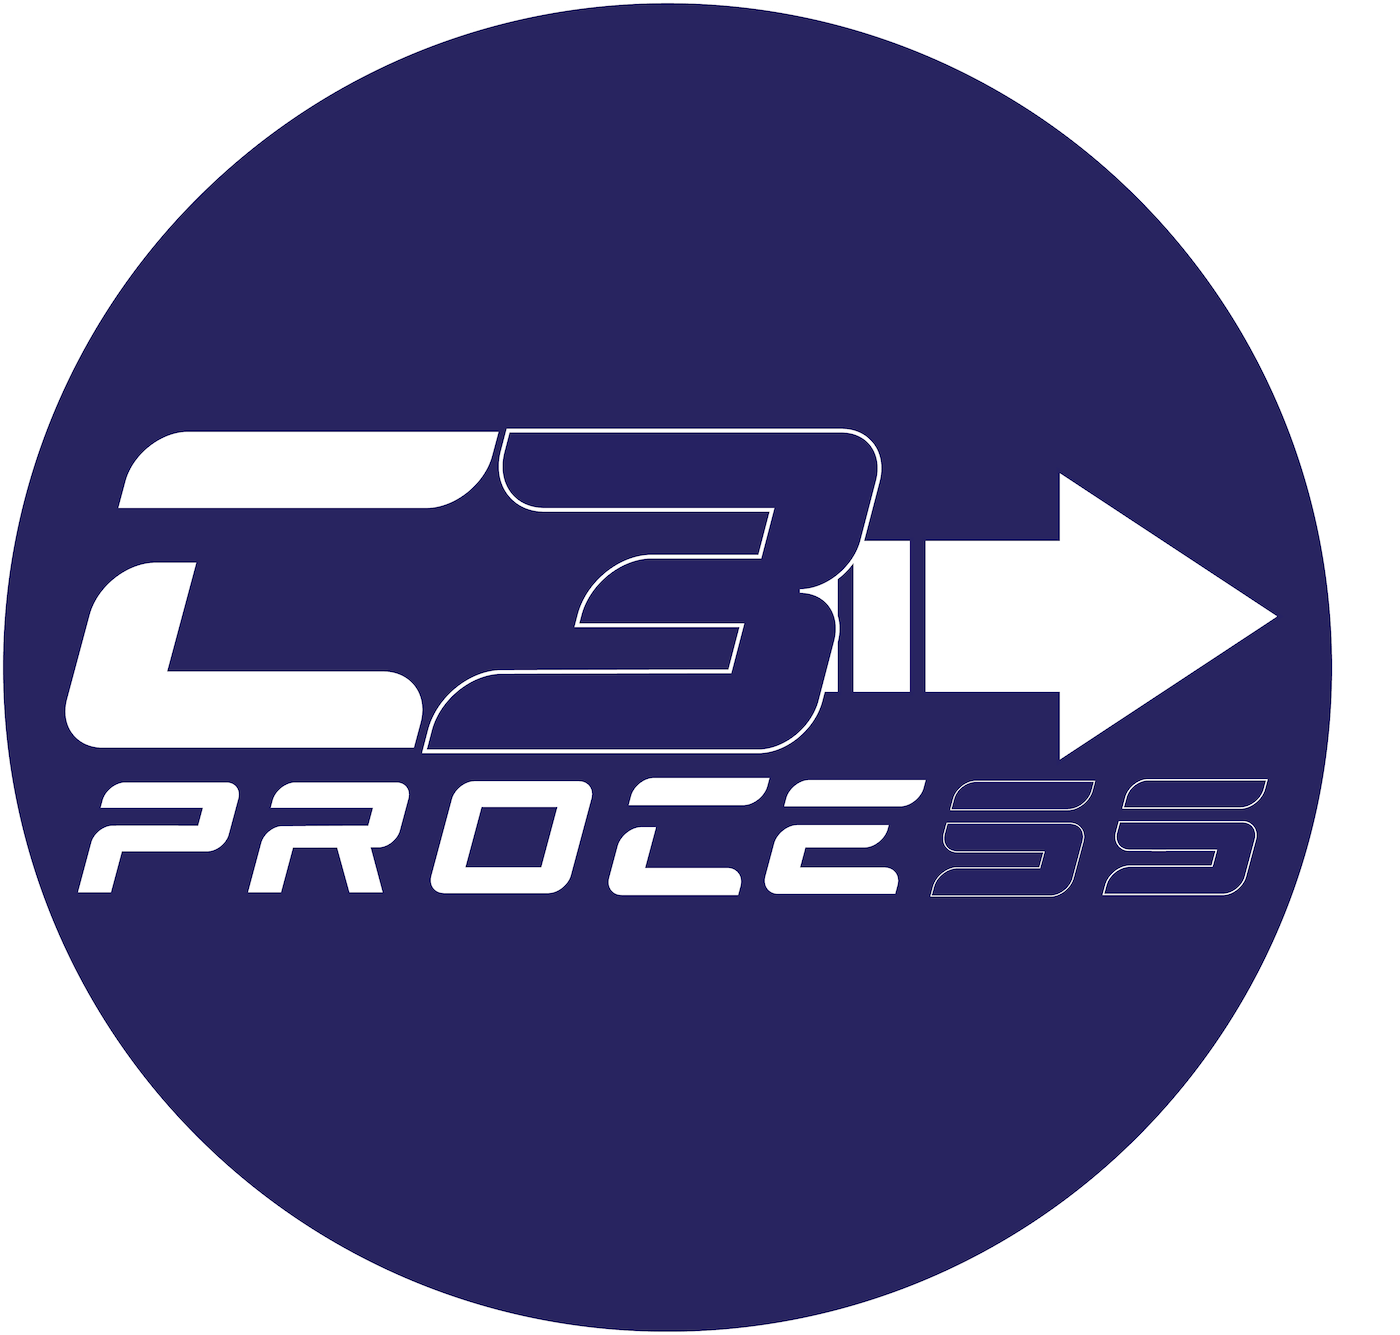 C3 Process Blue logo.png